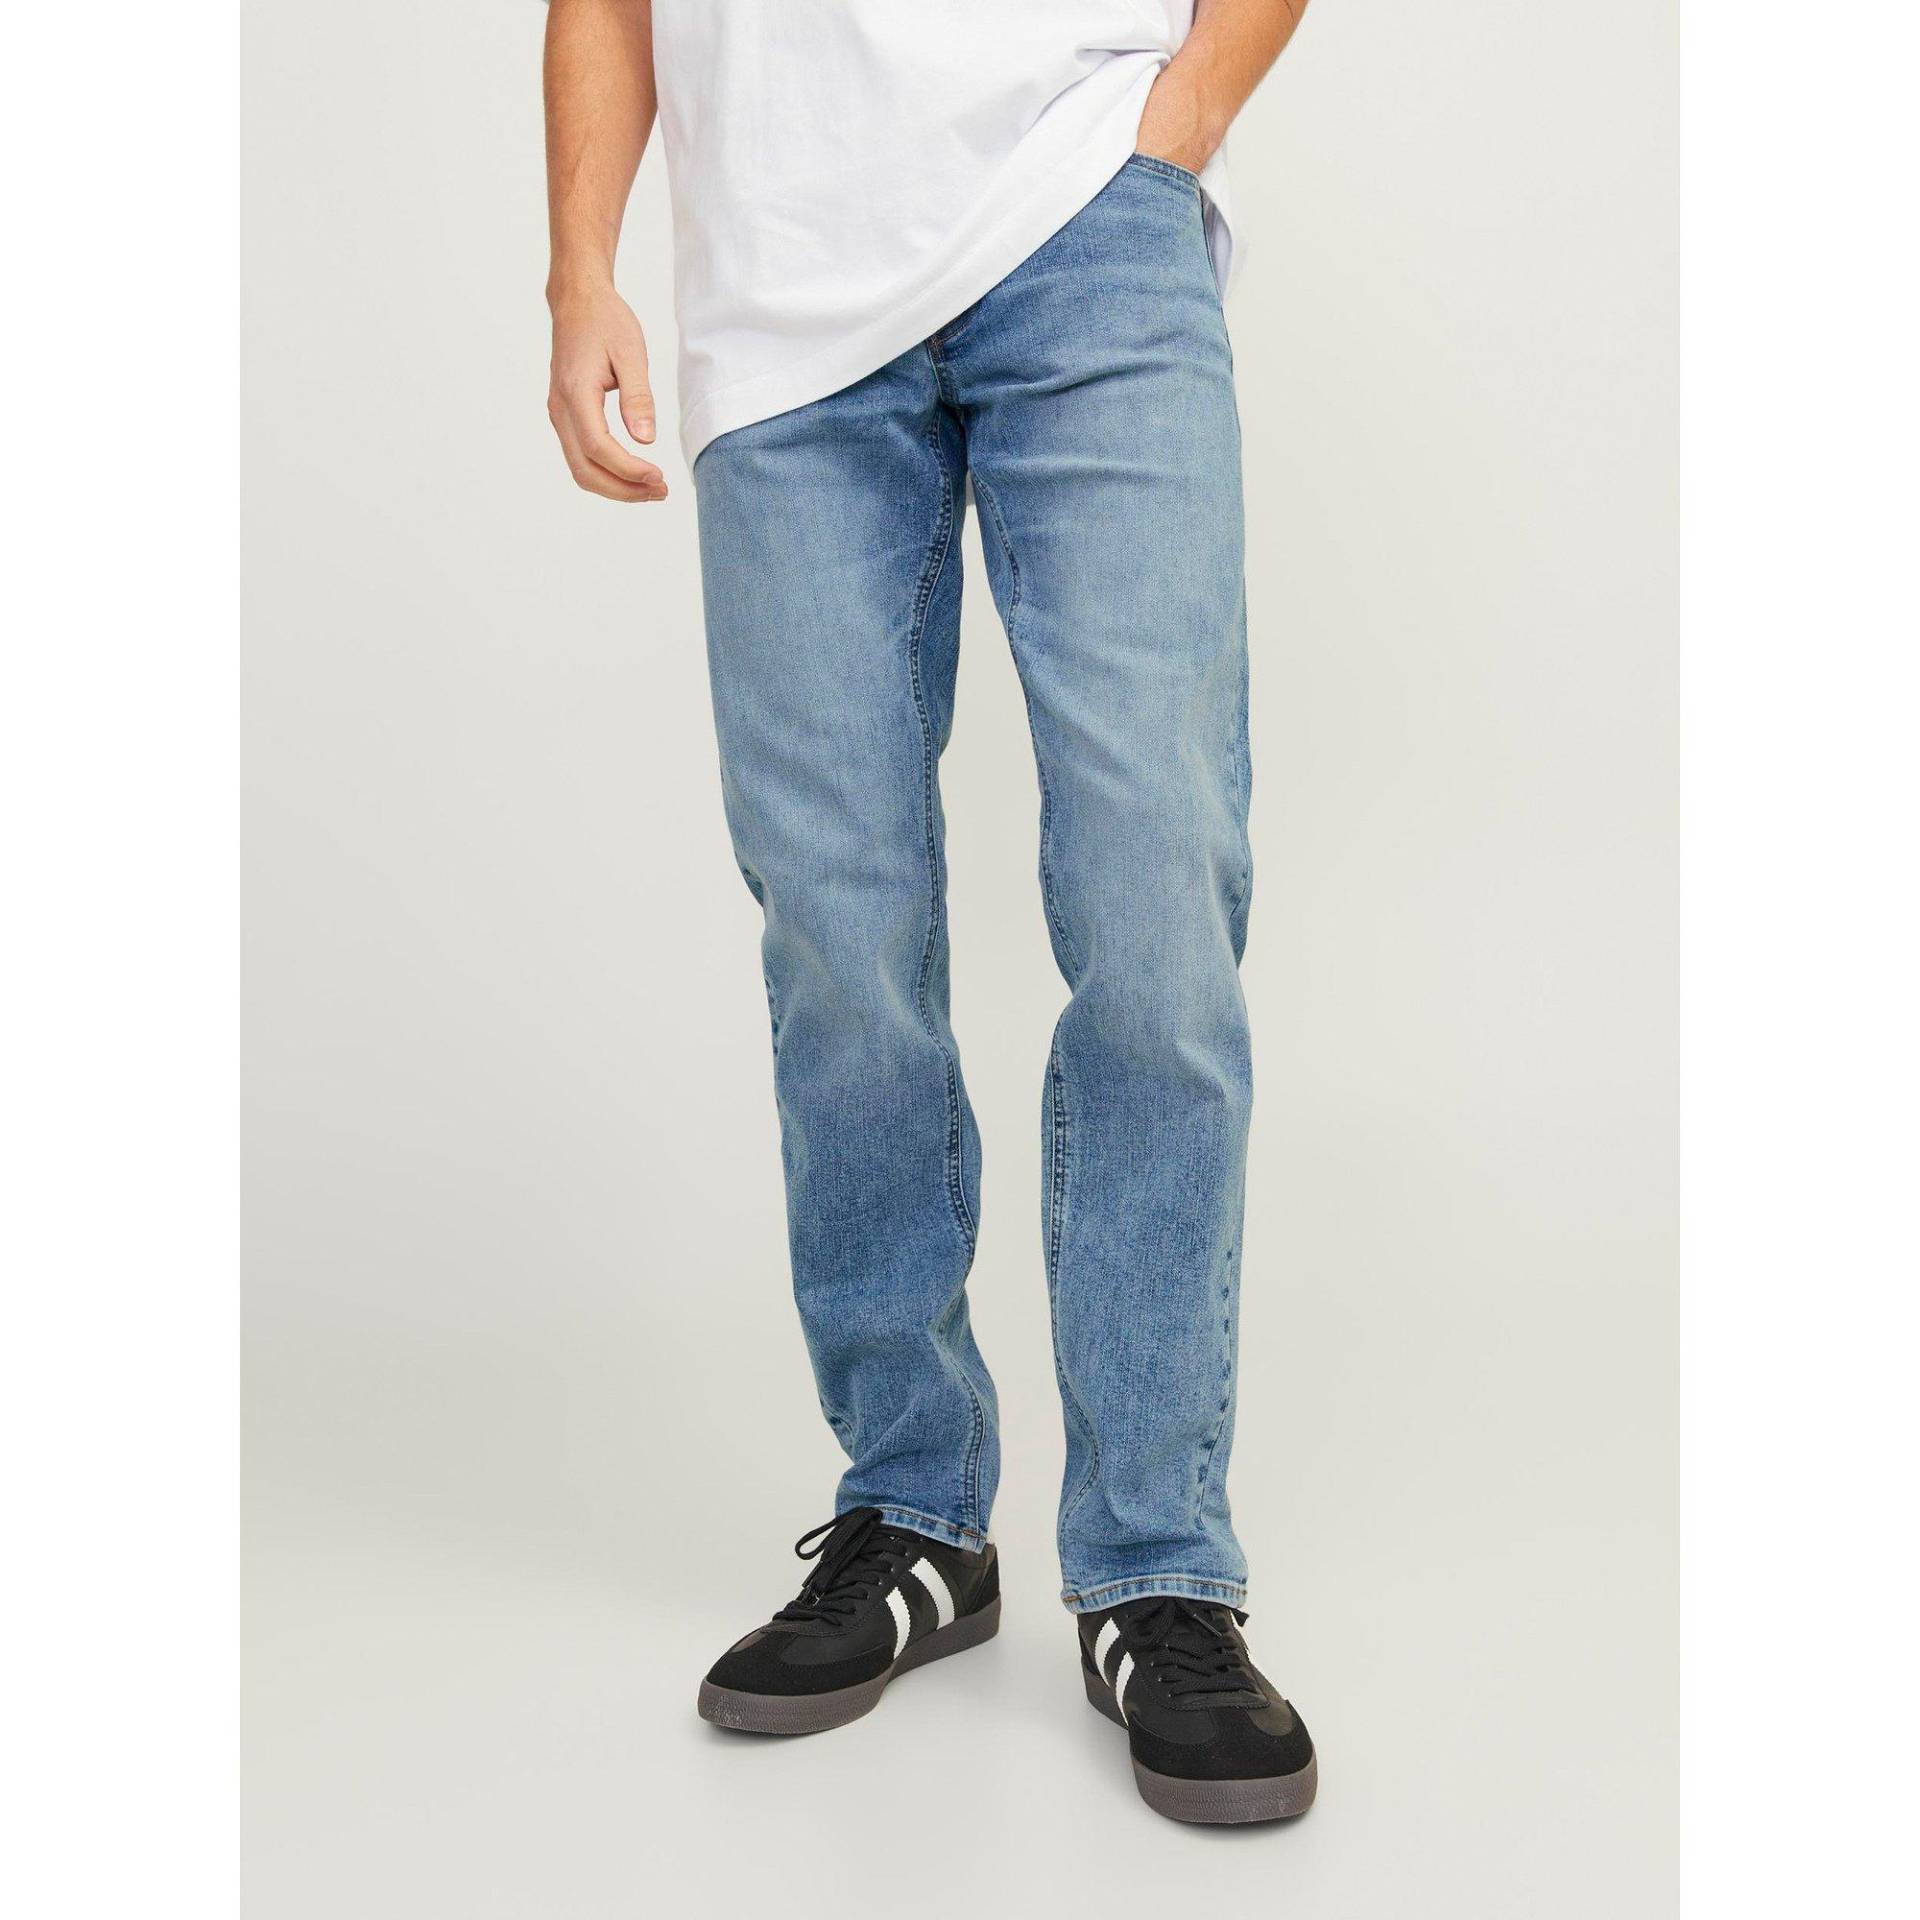 Jeans, Slim Fit Herren Blau Denim L32/W28 von JACK & JONES